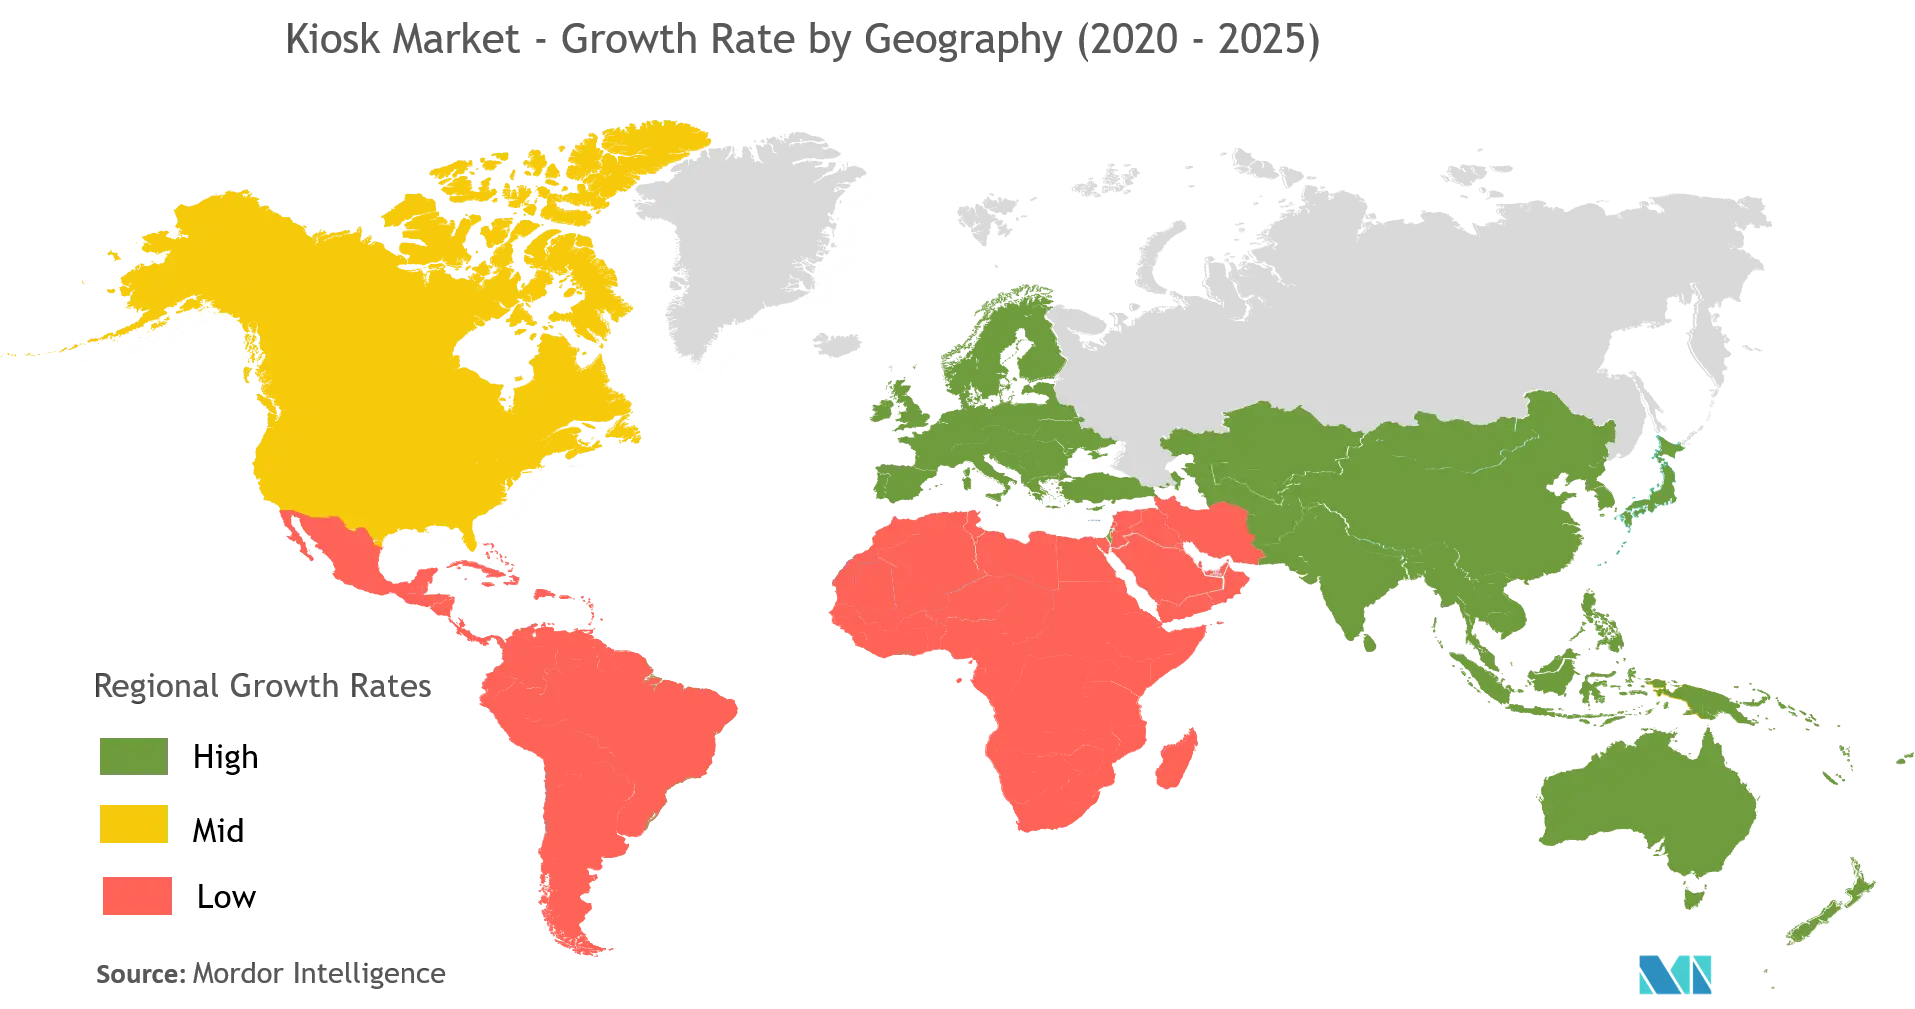  Kiosk Market Growth by Region